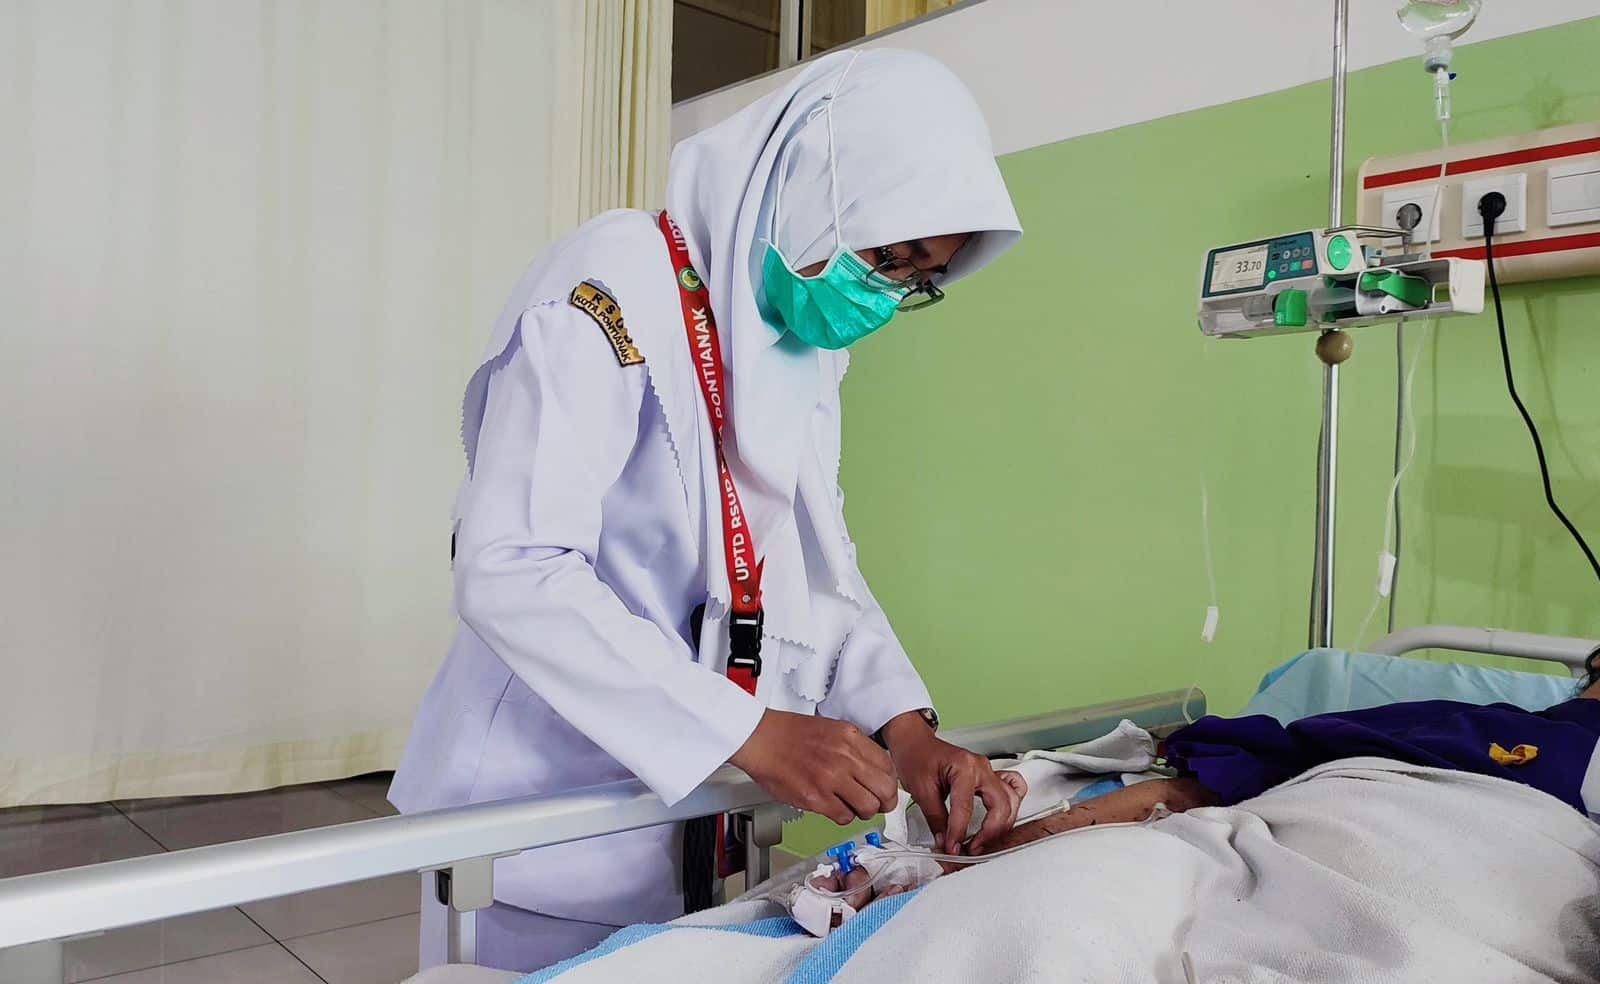 Petugas kesehatan di RSUD SSMA Pontianak sedang memeriksa kondisi pasien. (Foto: Humas-PKRS RSUD SSMA) 